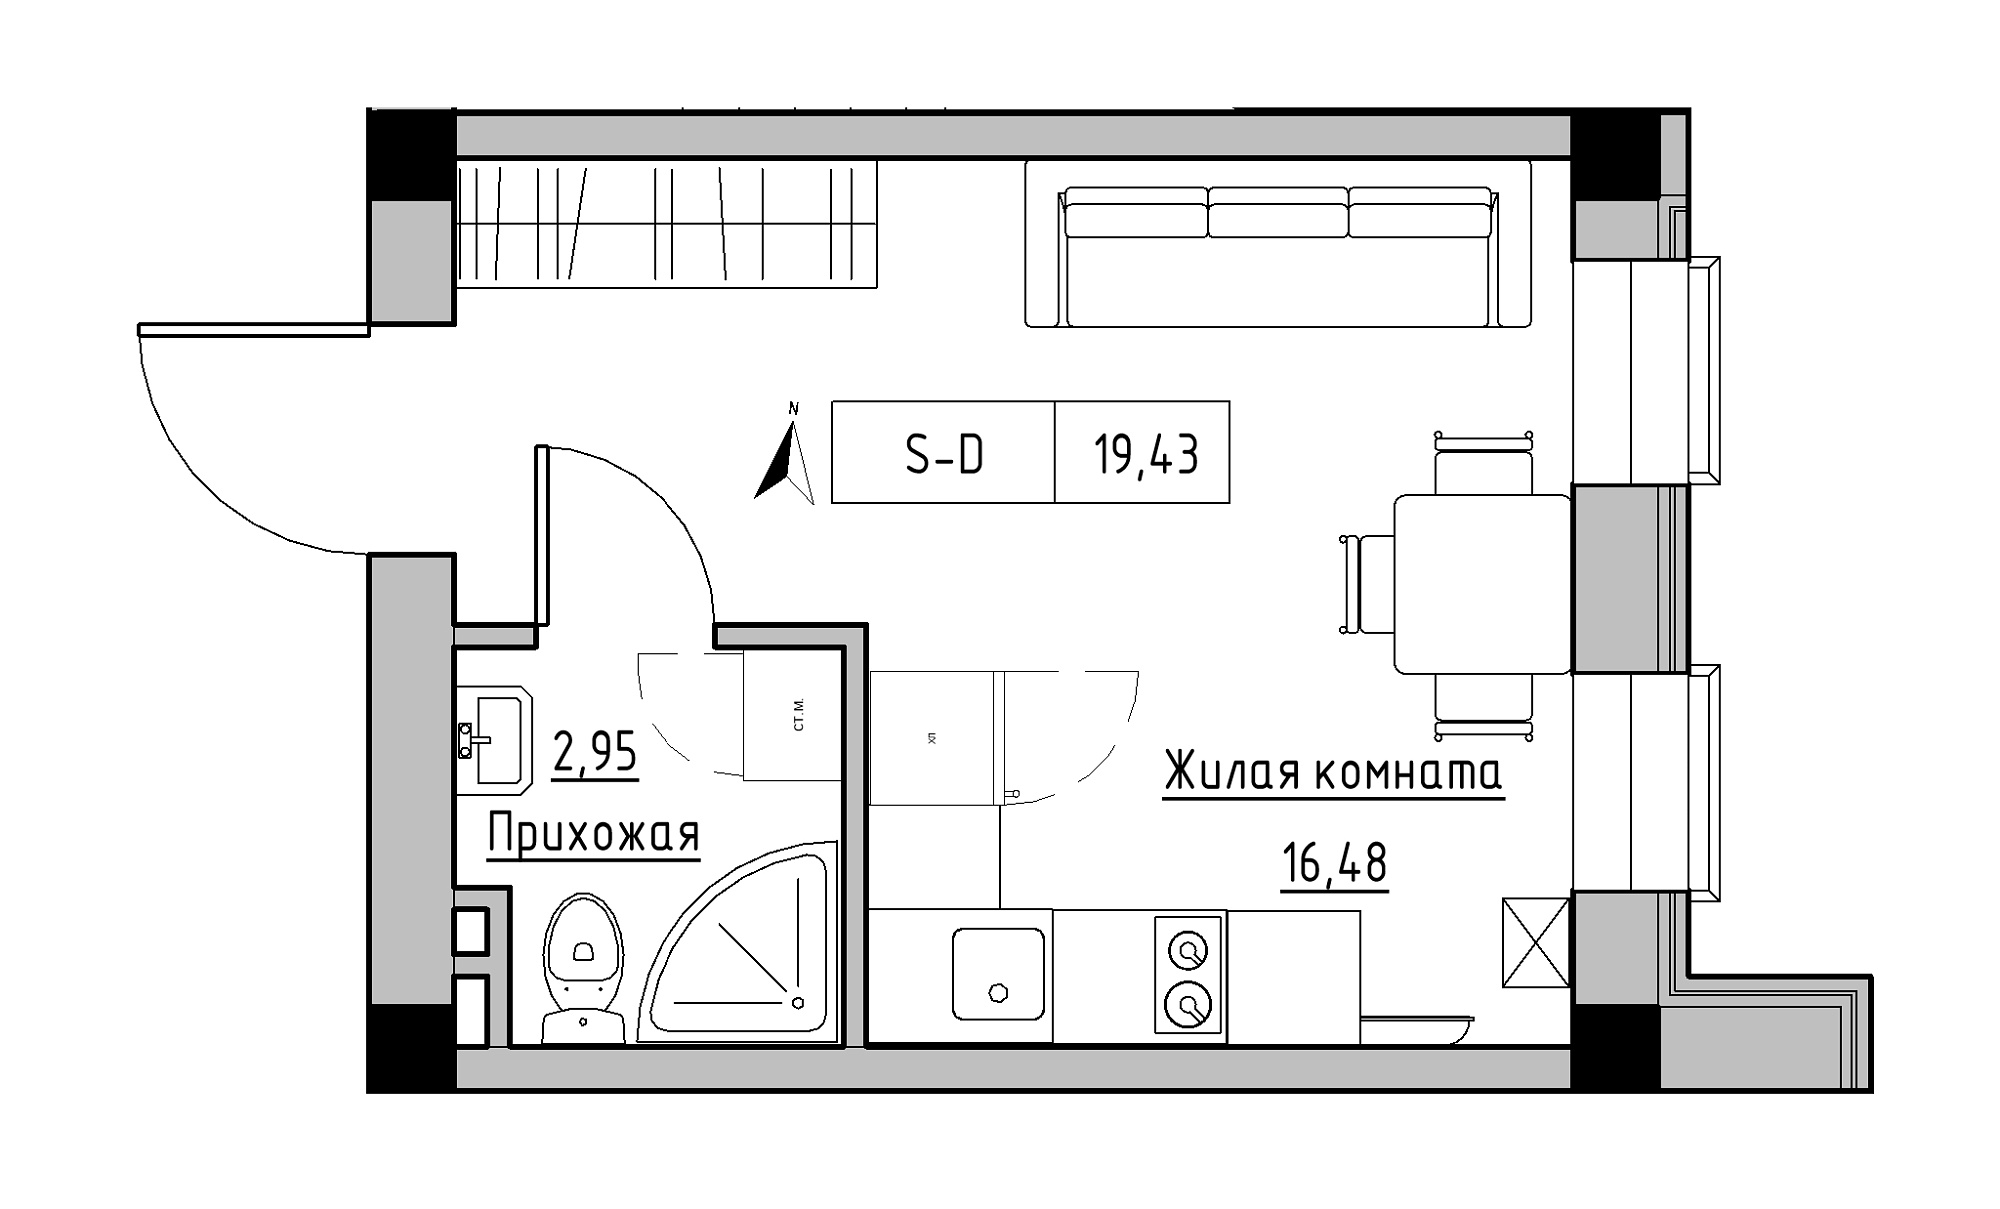 Planning Smart flats area 19.43m2, KS-023-01/0006.